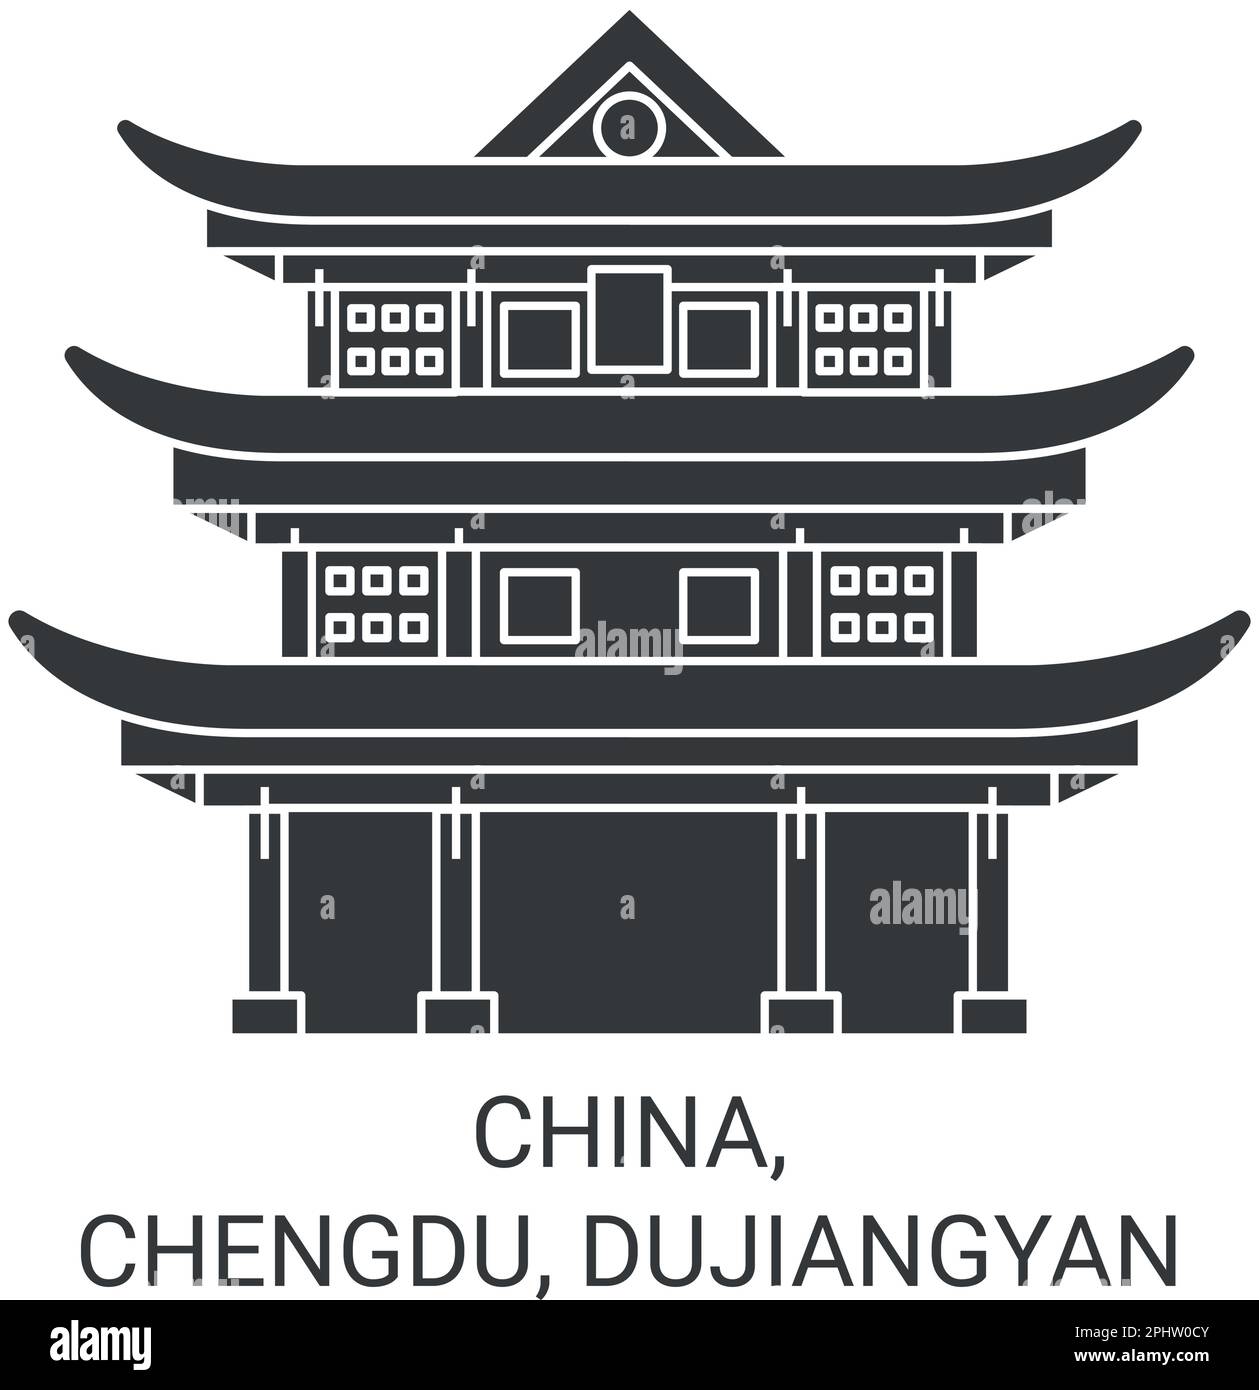 China, Chengdu, Dujiangyan travel landmark vector illustration Stock Vector